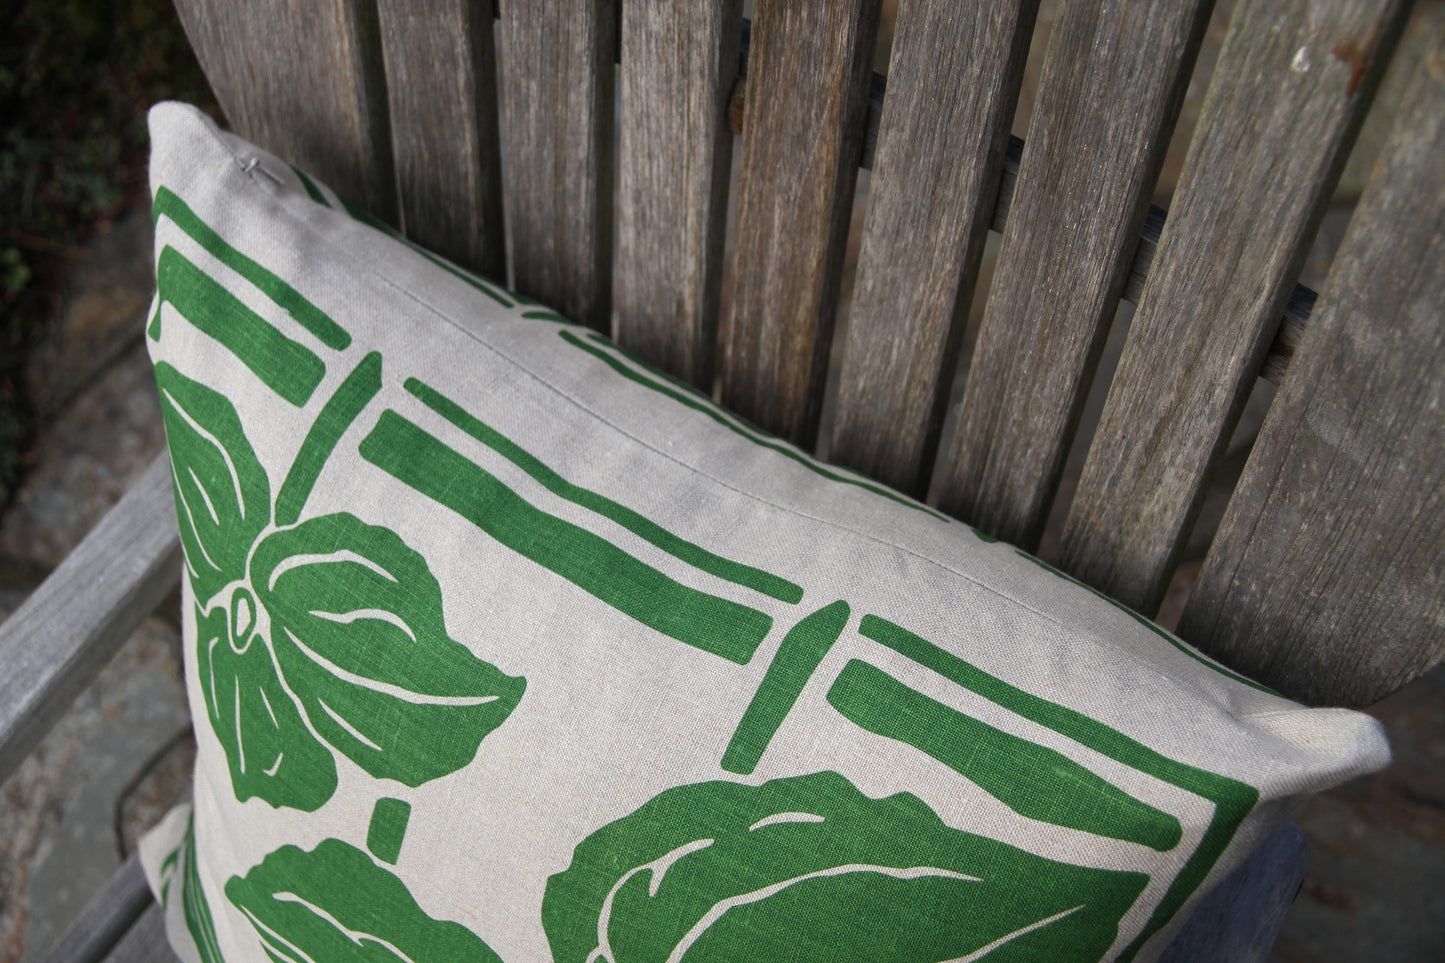 20" Trillium Pillow in New Leaf Green